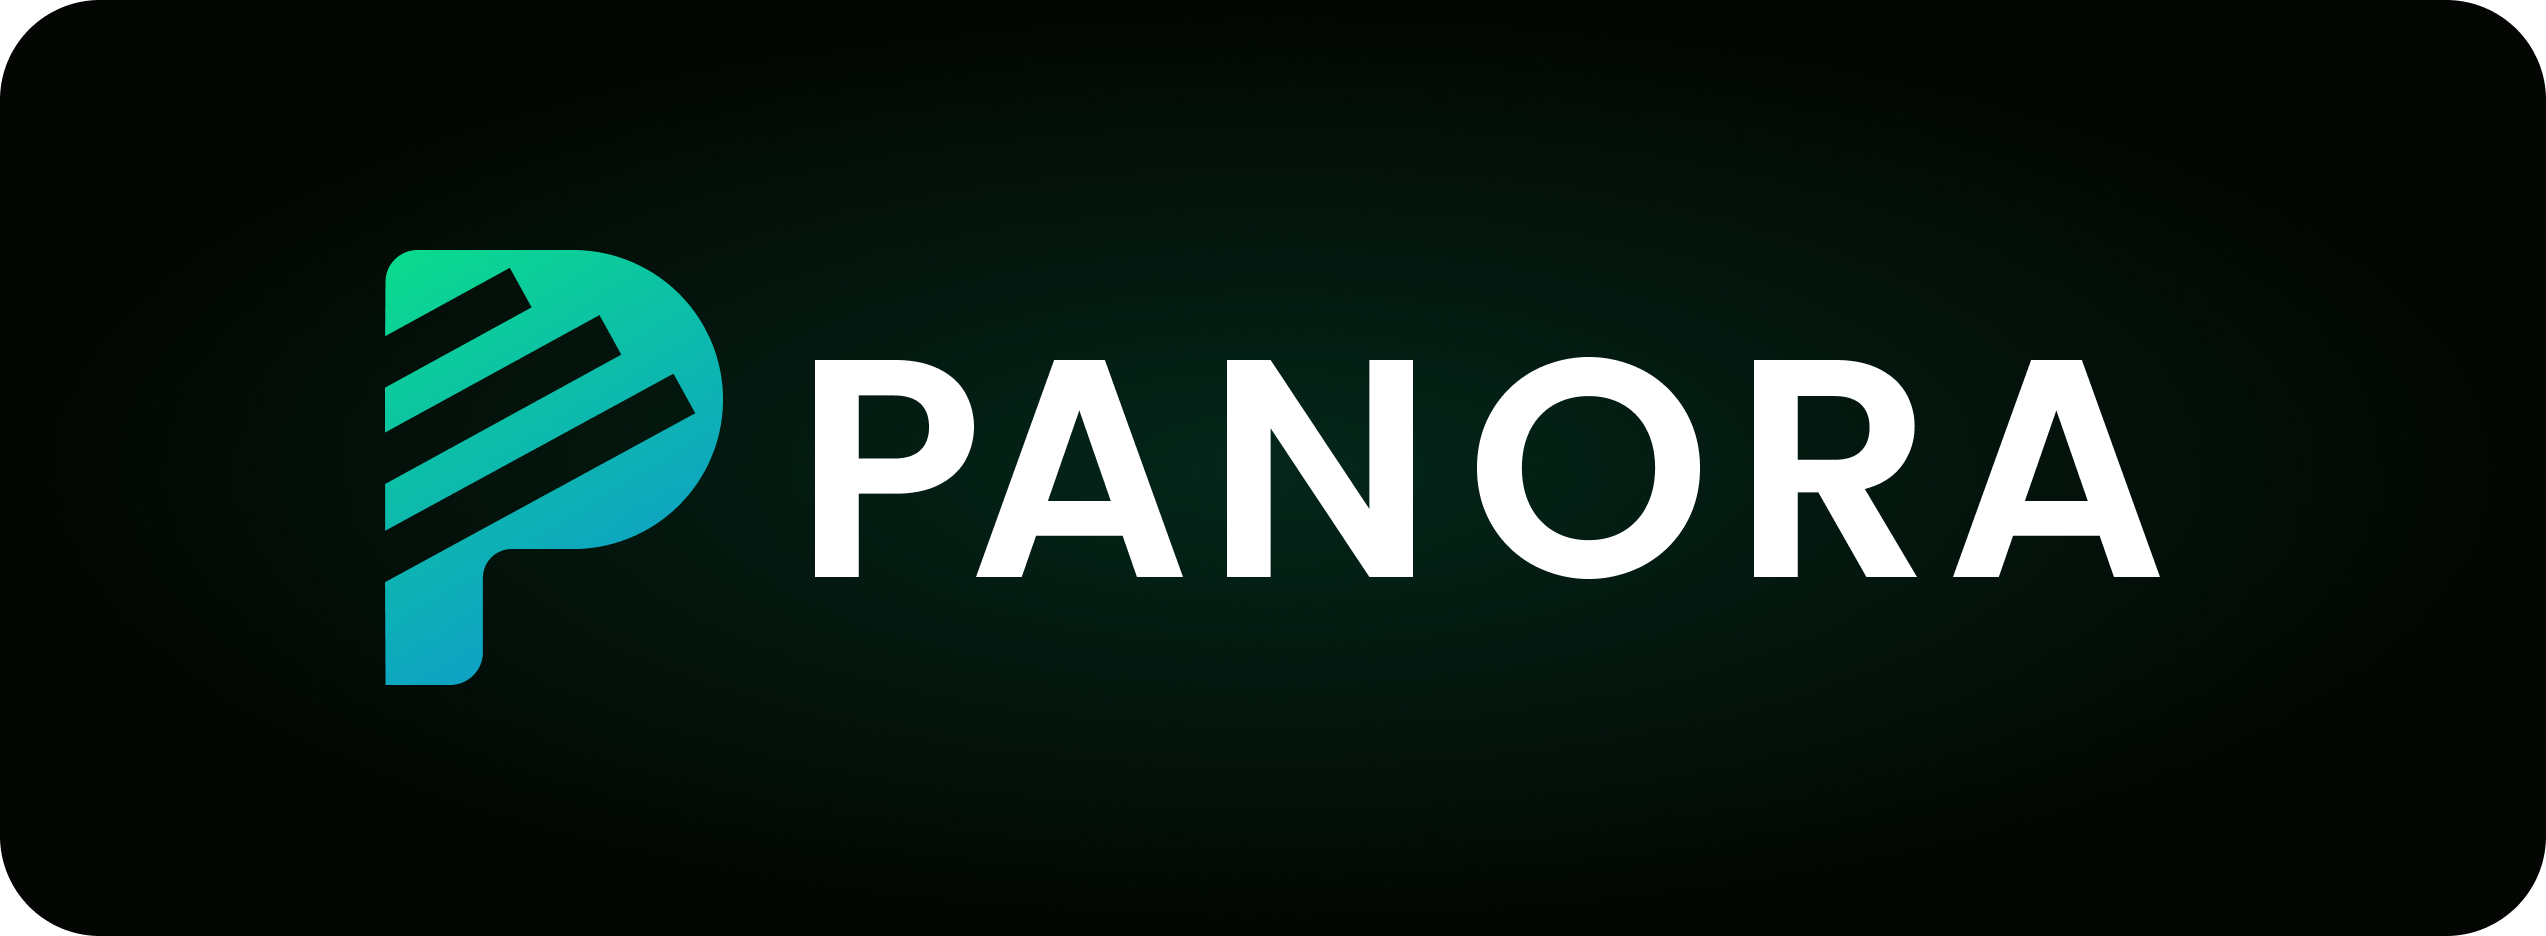 Panora Box Background Logo Text